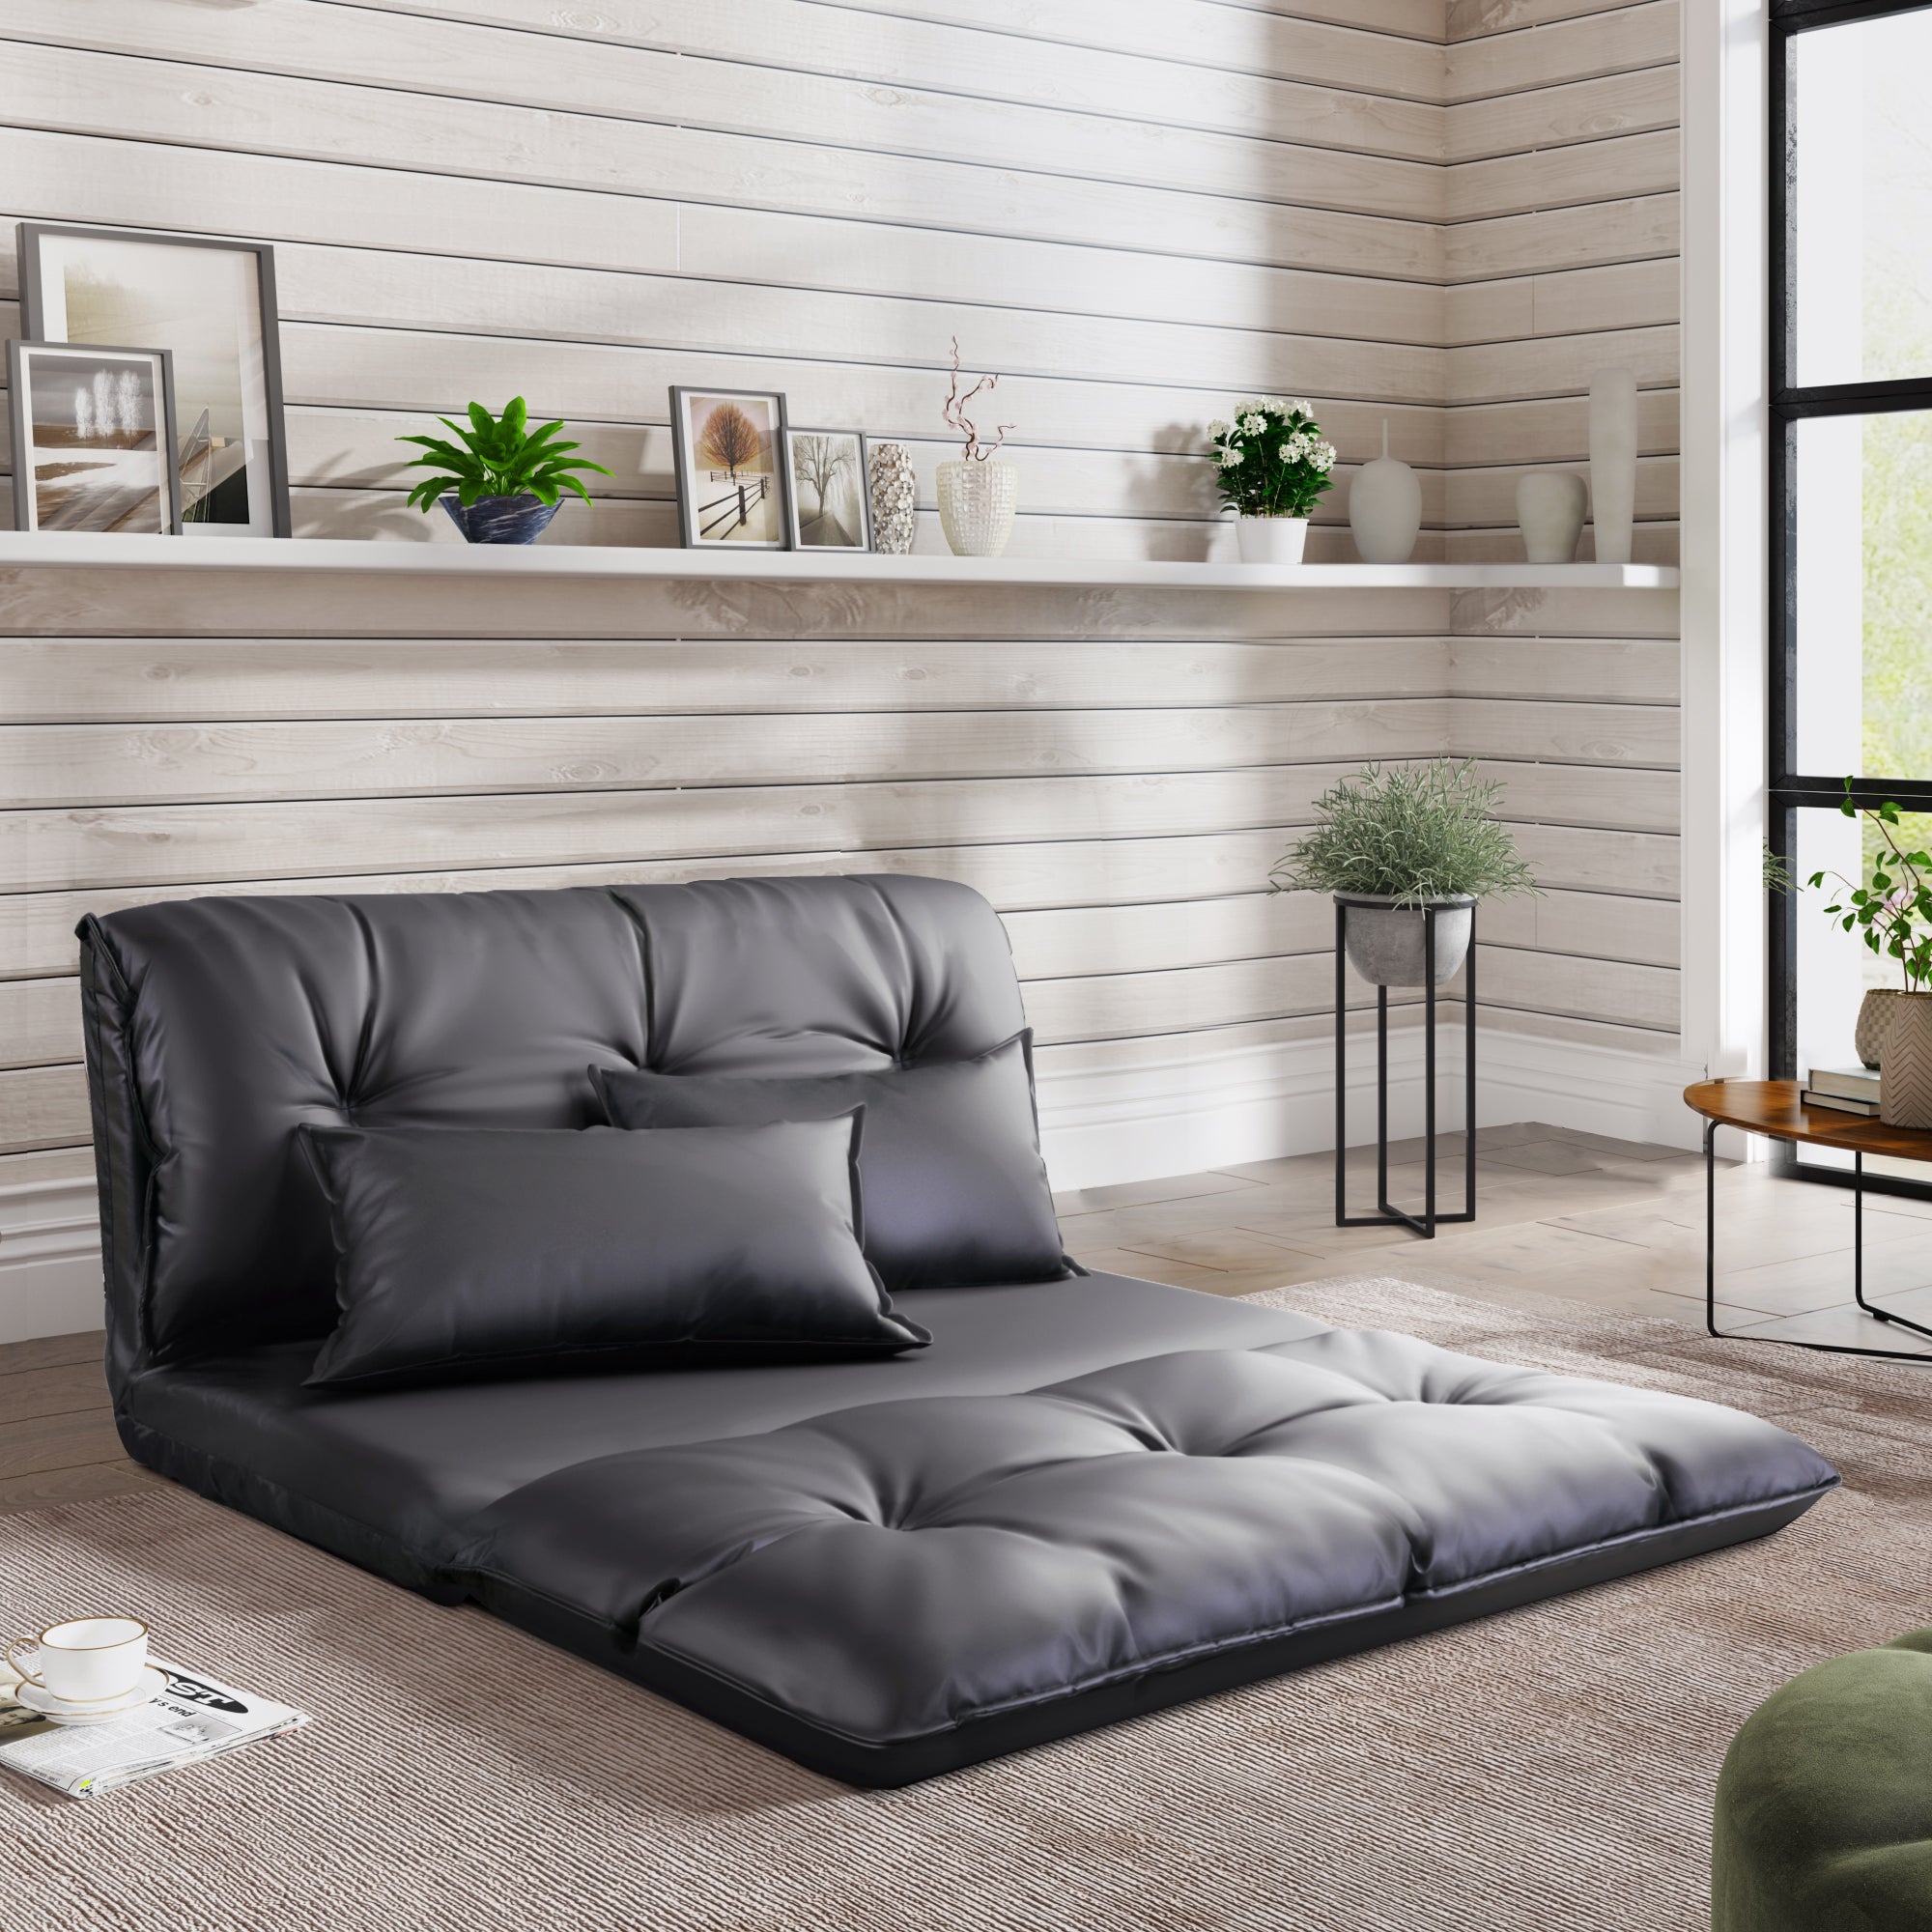 Orisfur Lazy Sofa Adjustable Folding Futon Sofa Video Gaming Sofa with Two Pillows (Black)